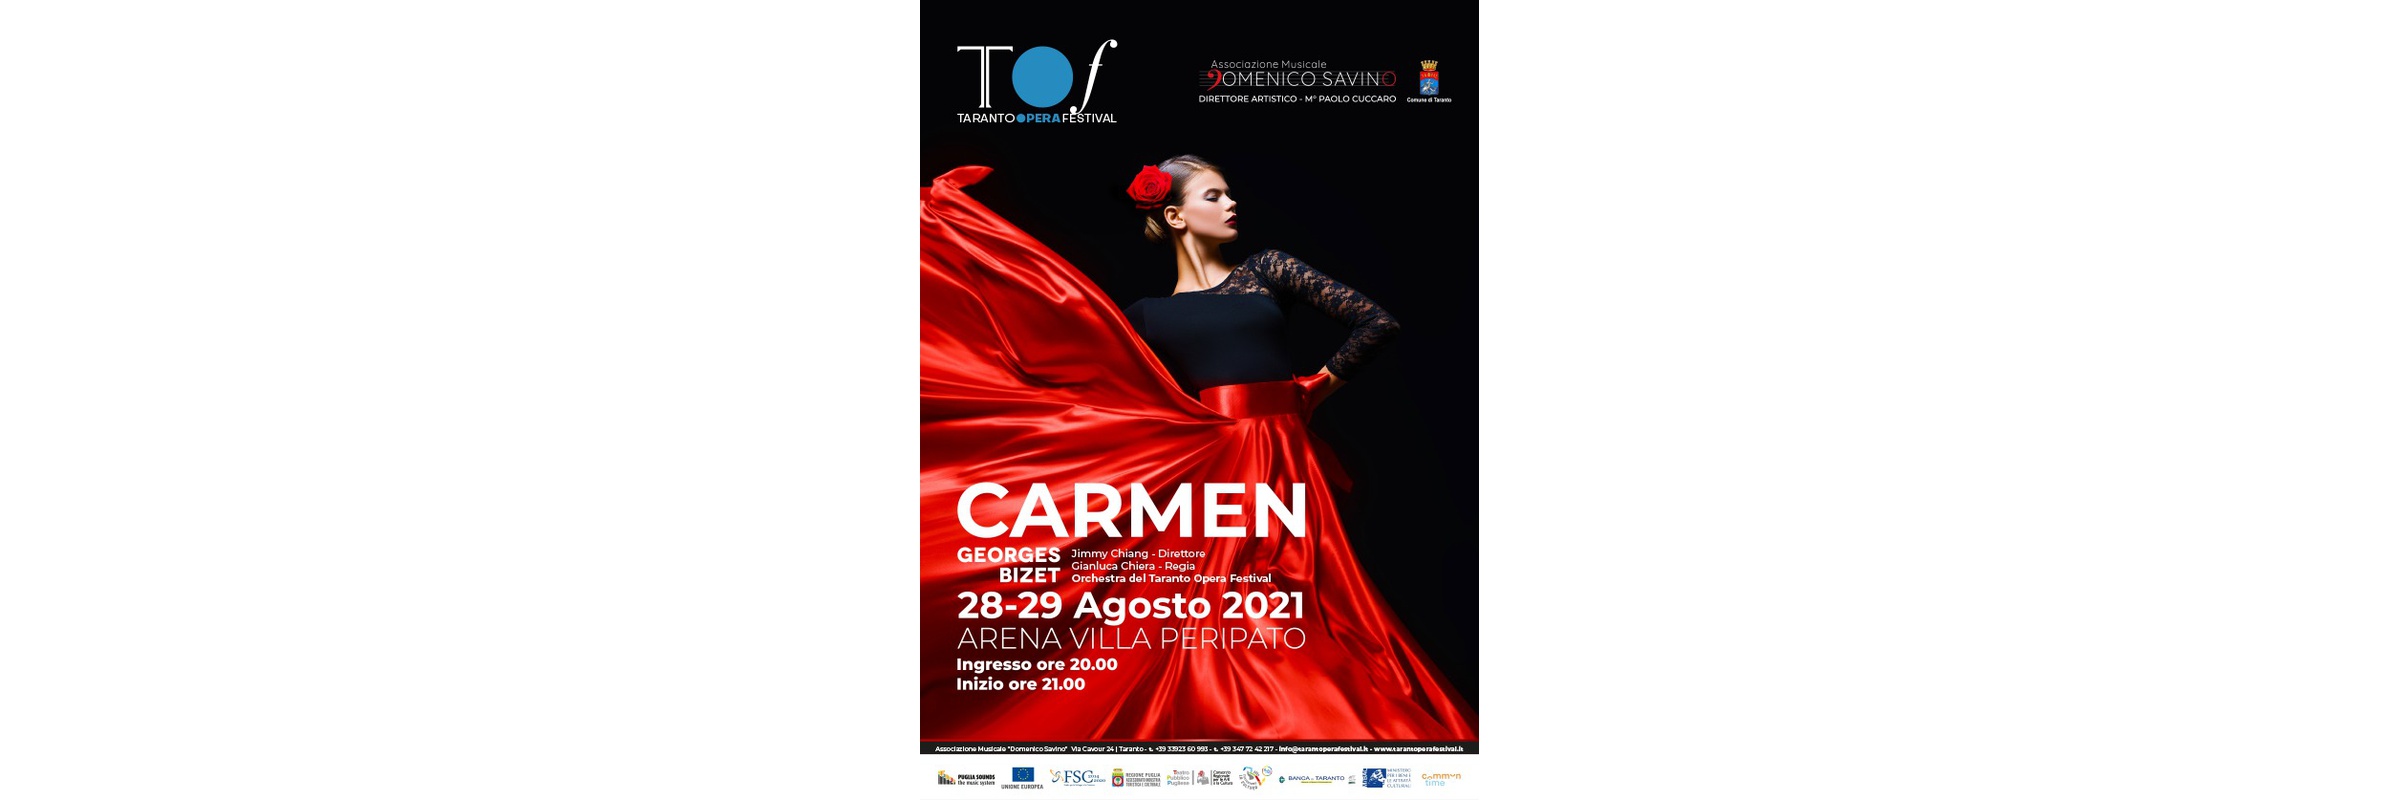 Musical Association Domenico Savino - Carmen